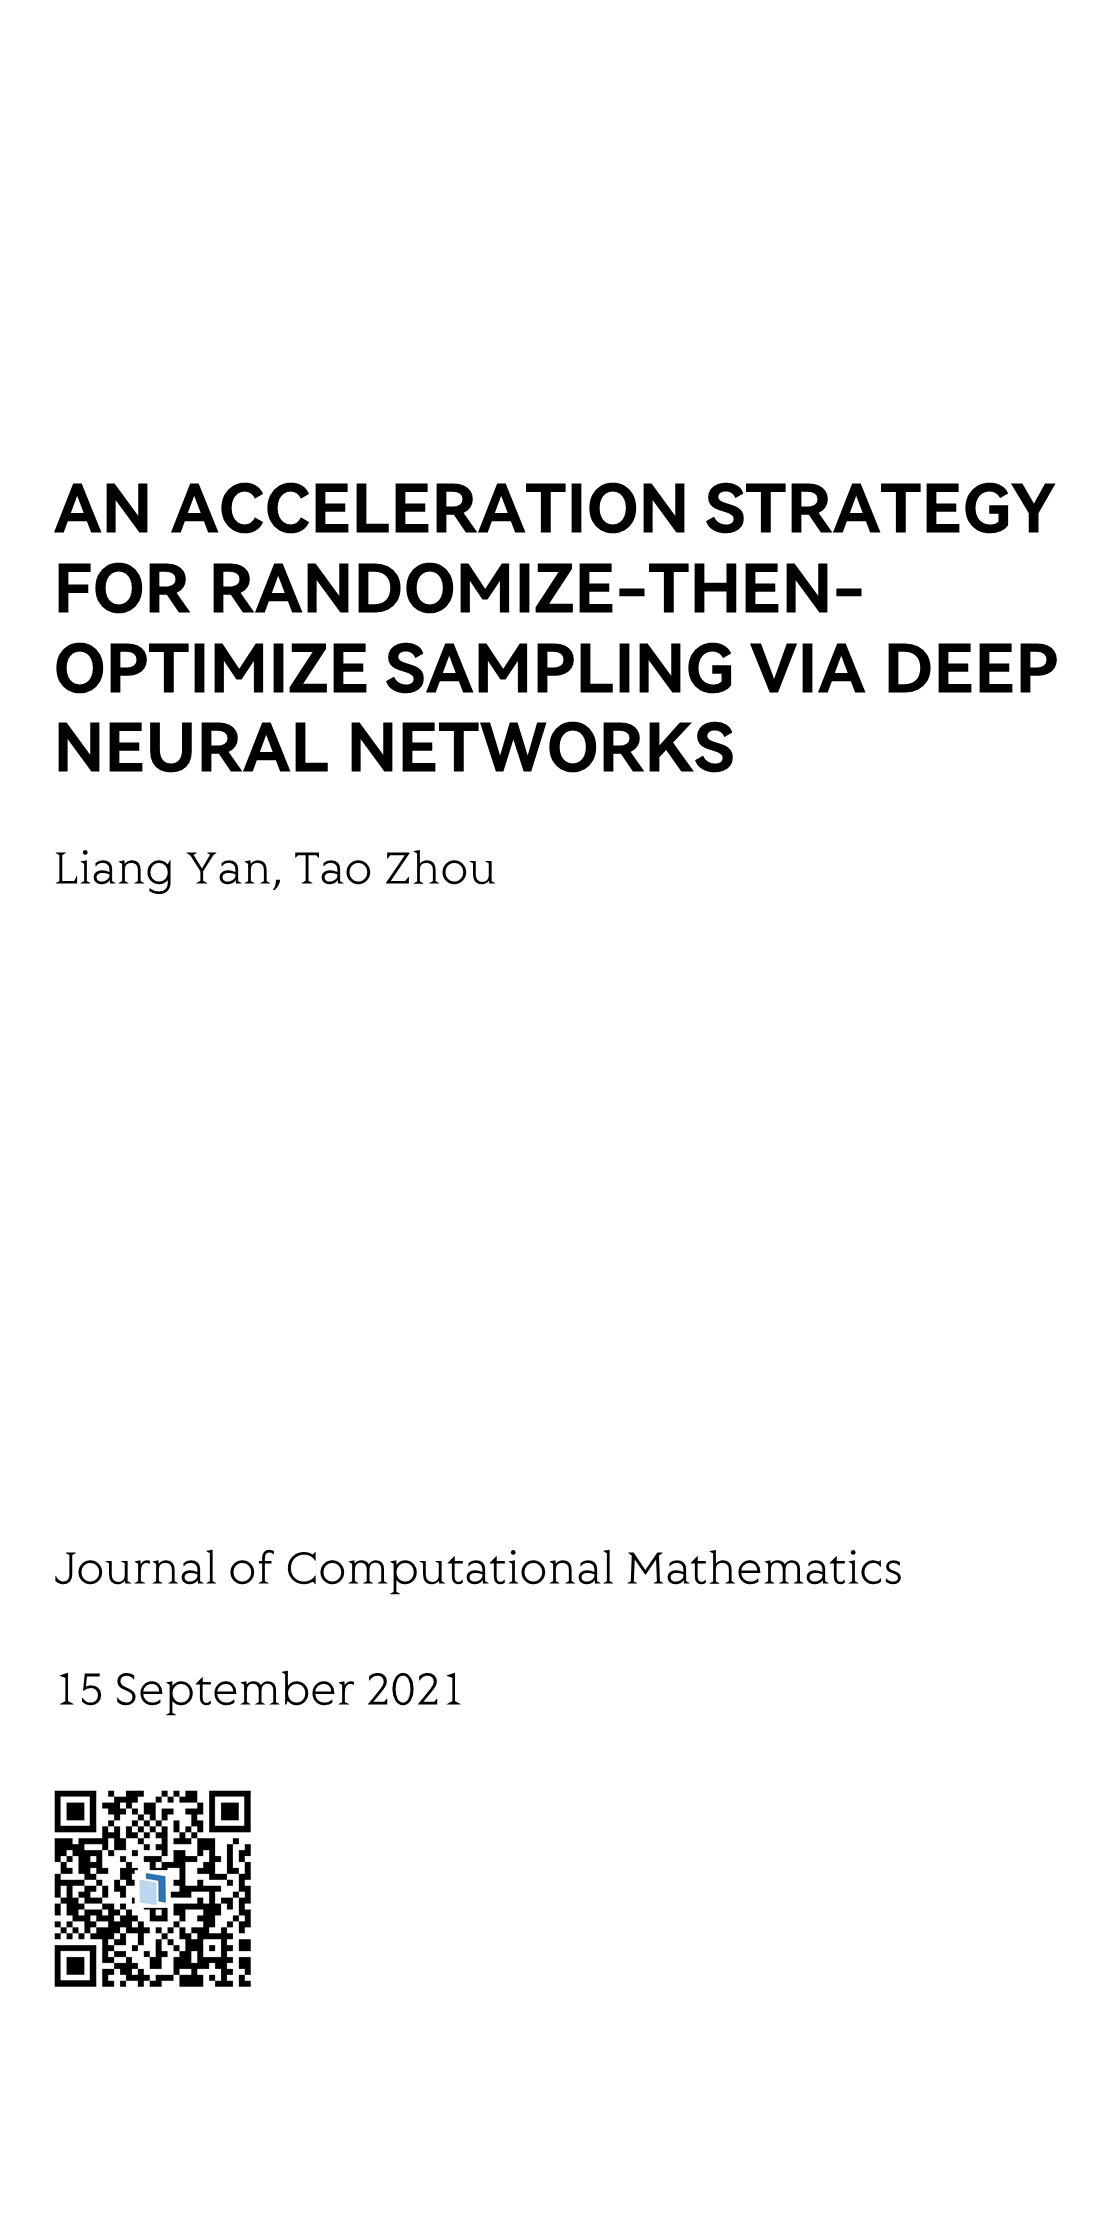 An acceleration strategy for randomize-then-optimize sampling via deep neural networks_1